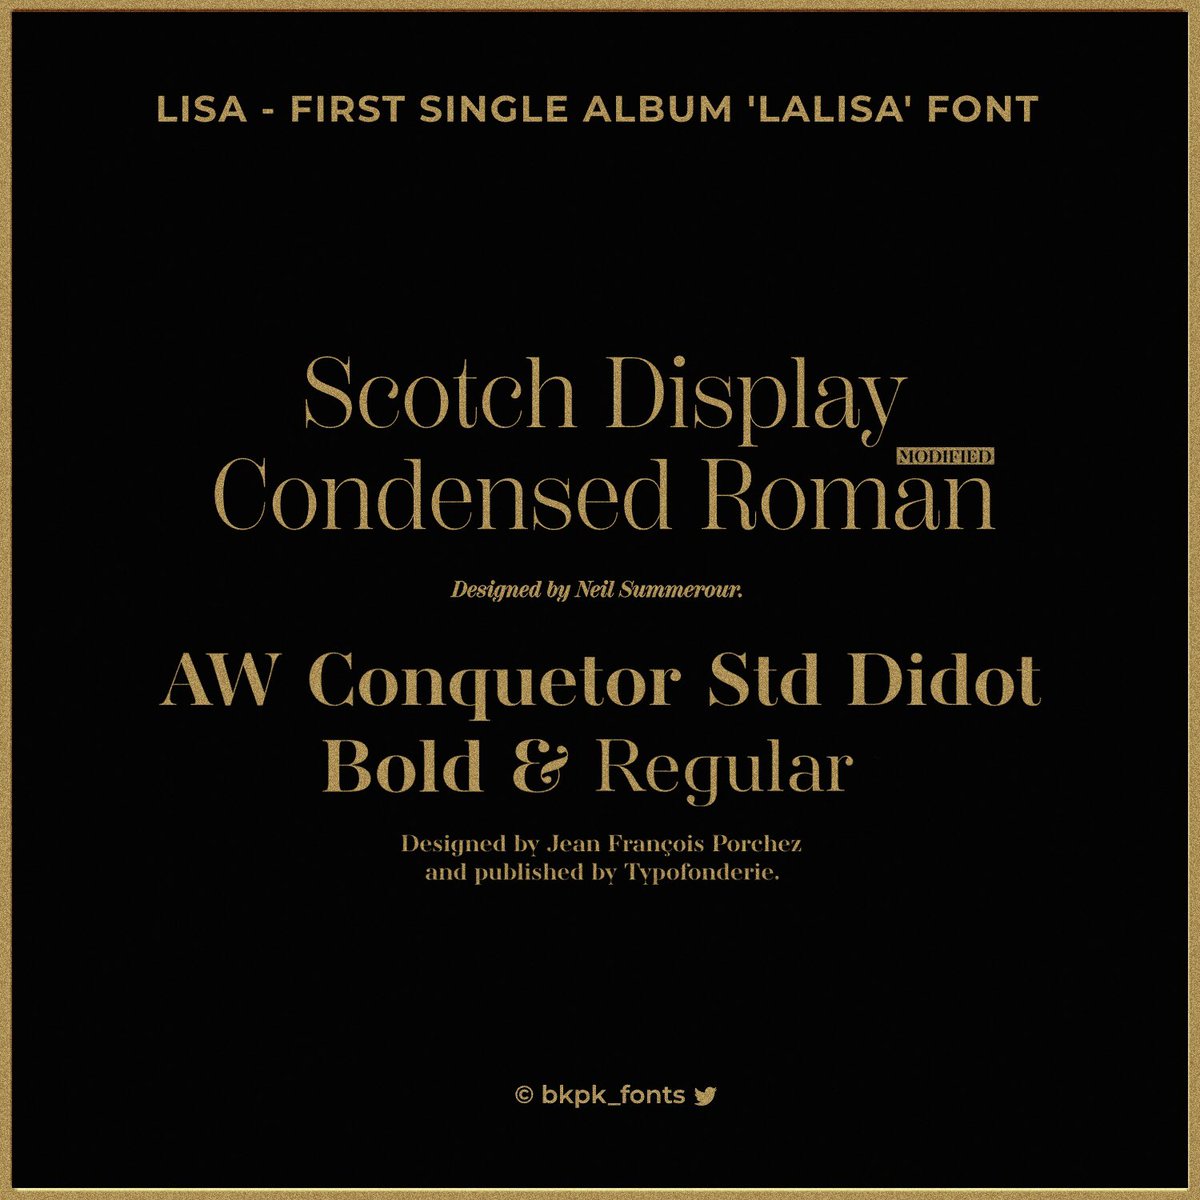 #LISA - FIRST SINGLE ALBUM 'LALISA' FONT

Scotch Display Condensed : fonts.adobe.com/fonts/scotch-d…
AW Conquetor Std Didot : myfonts.com/collections/aw…

#리사 #BLACKPINK  #블랙핑크  #FIRSTSINGLEALBUM #LALISA #TITLE #LALISA #20210910_12amEST #20210910_1pmKST #YG